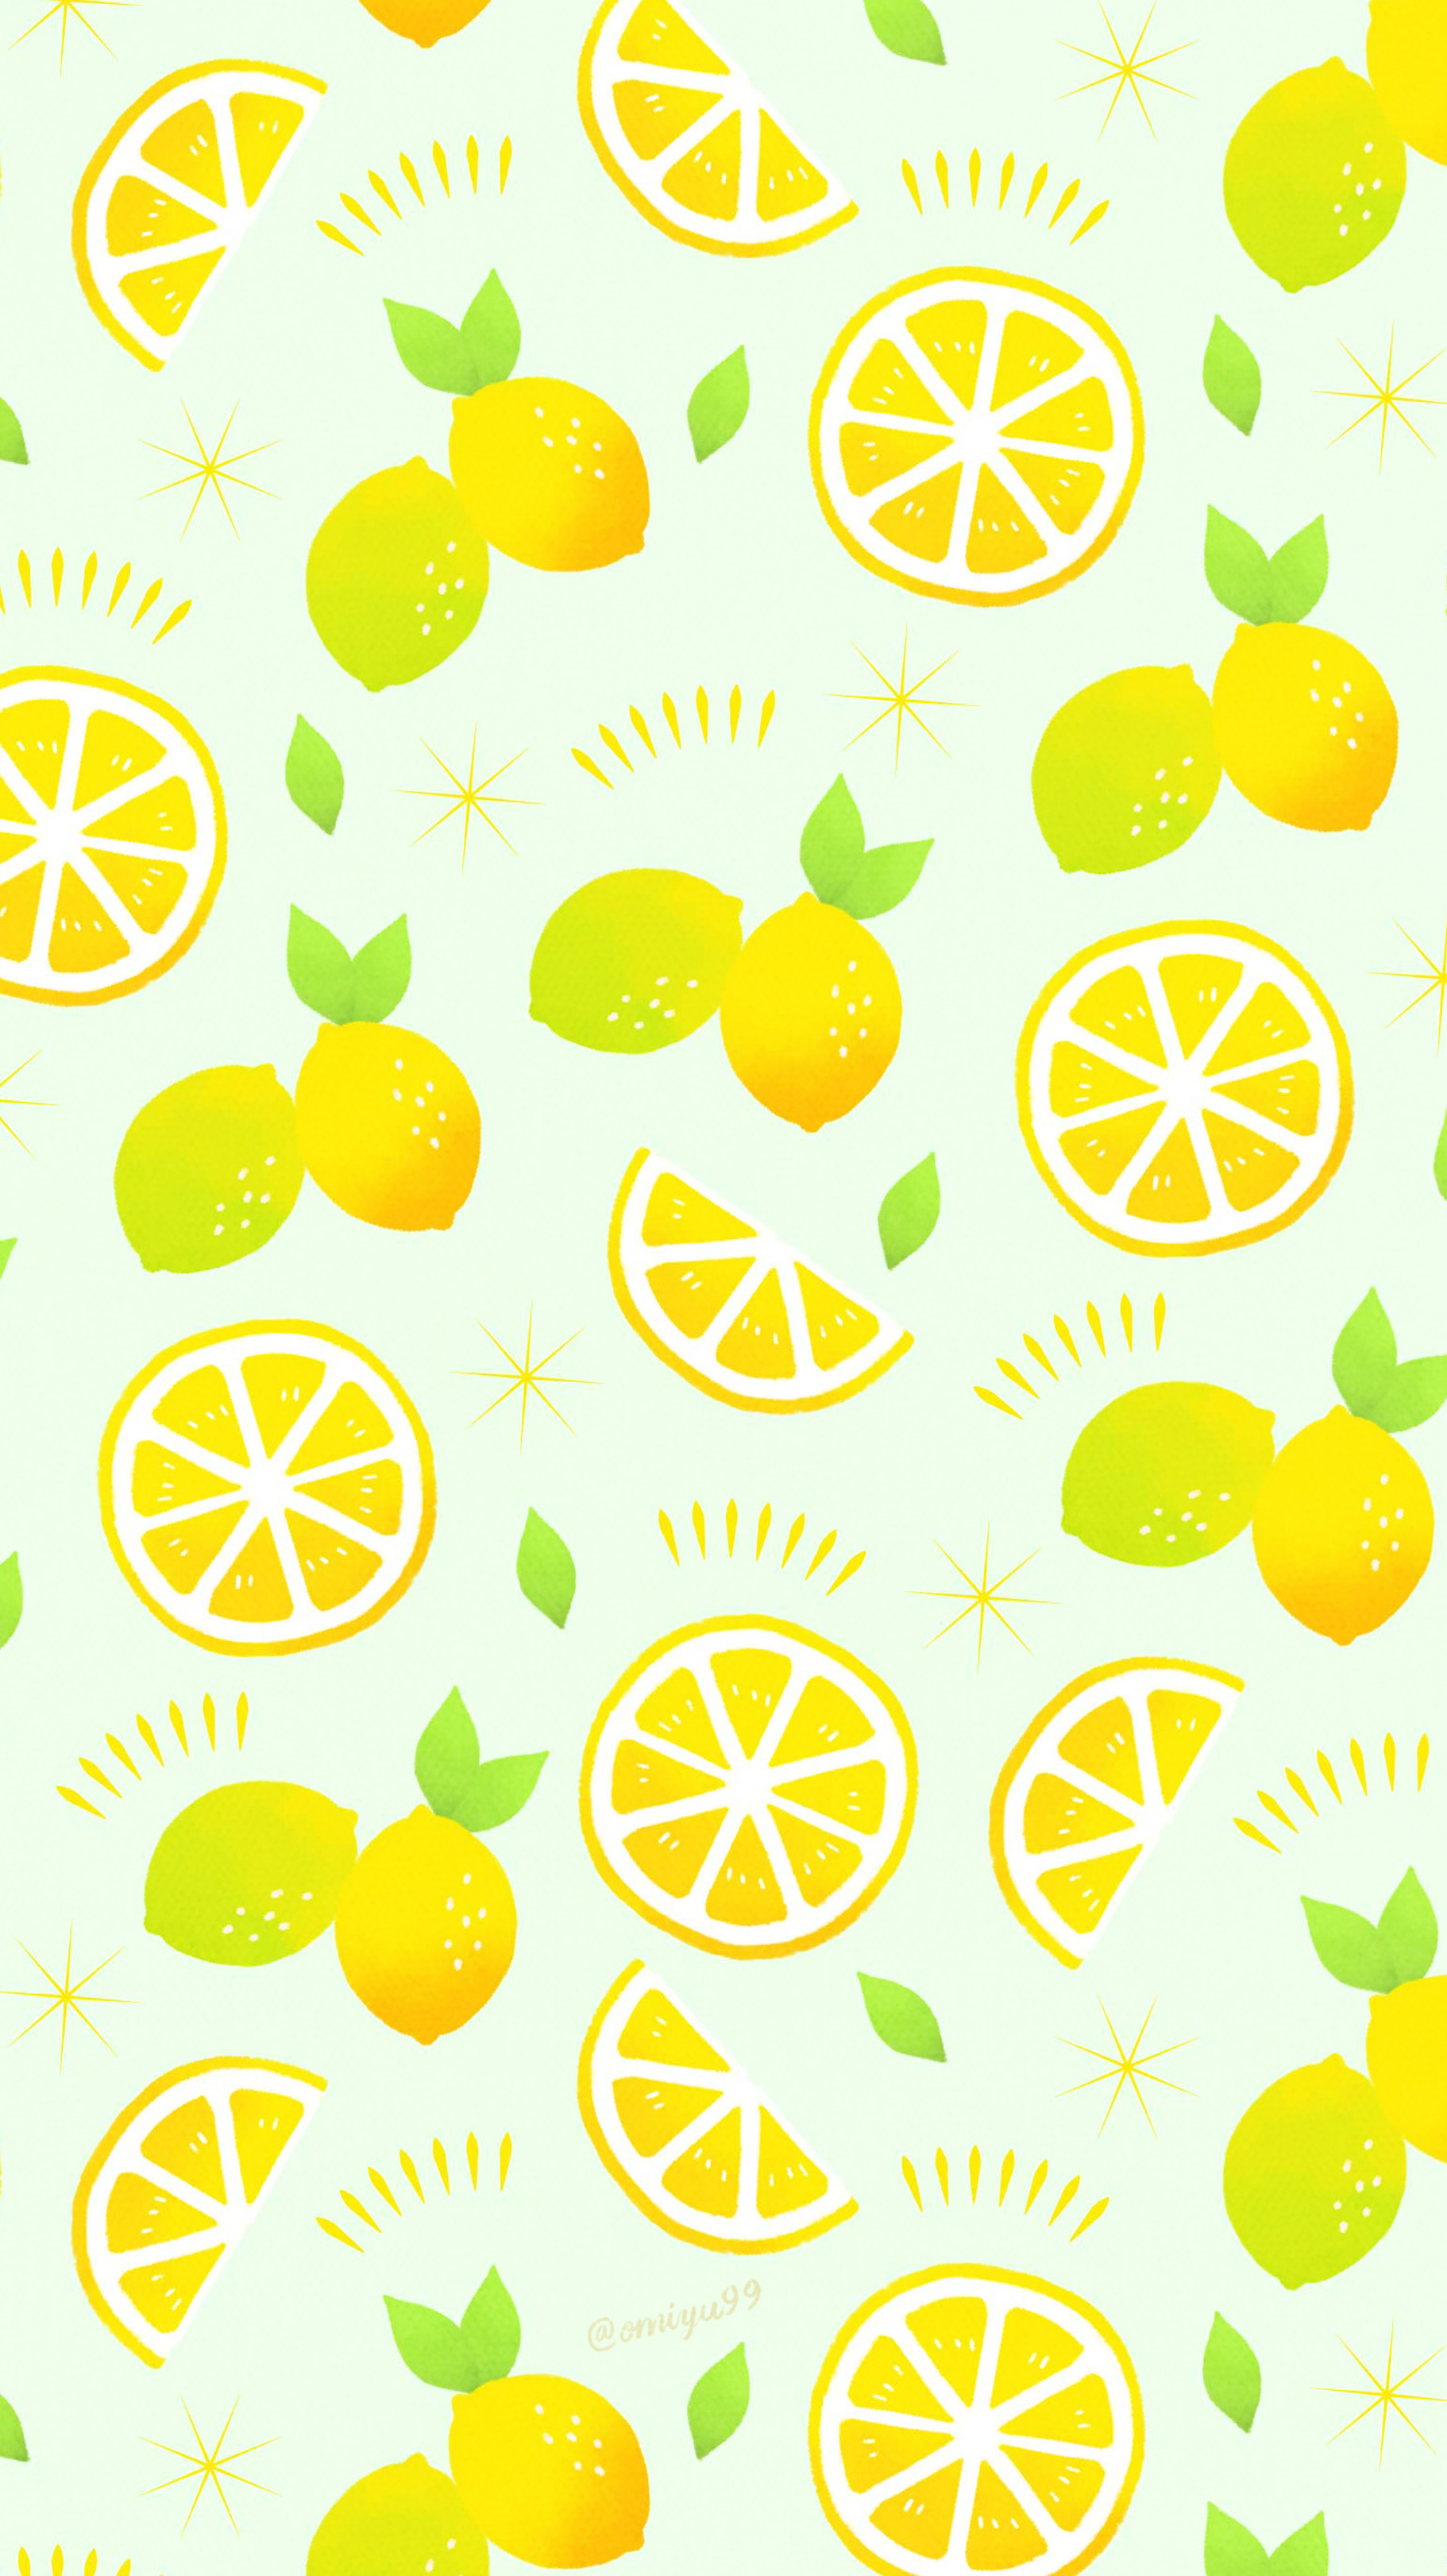 טוויטר Omiyu お返事遅くなります בטוויטר レモンな壁紙 Illust Illustration 壁紙 イラスト Iphone壁紙 レモン Lemon 食べ物 T Co Aqgkzgjwwx